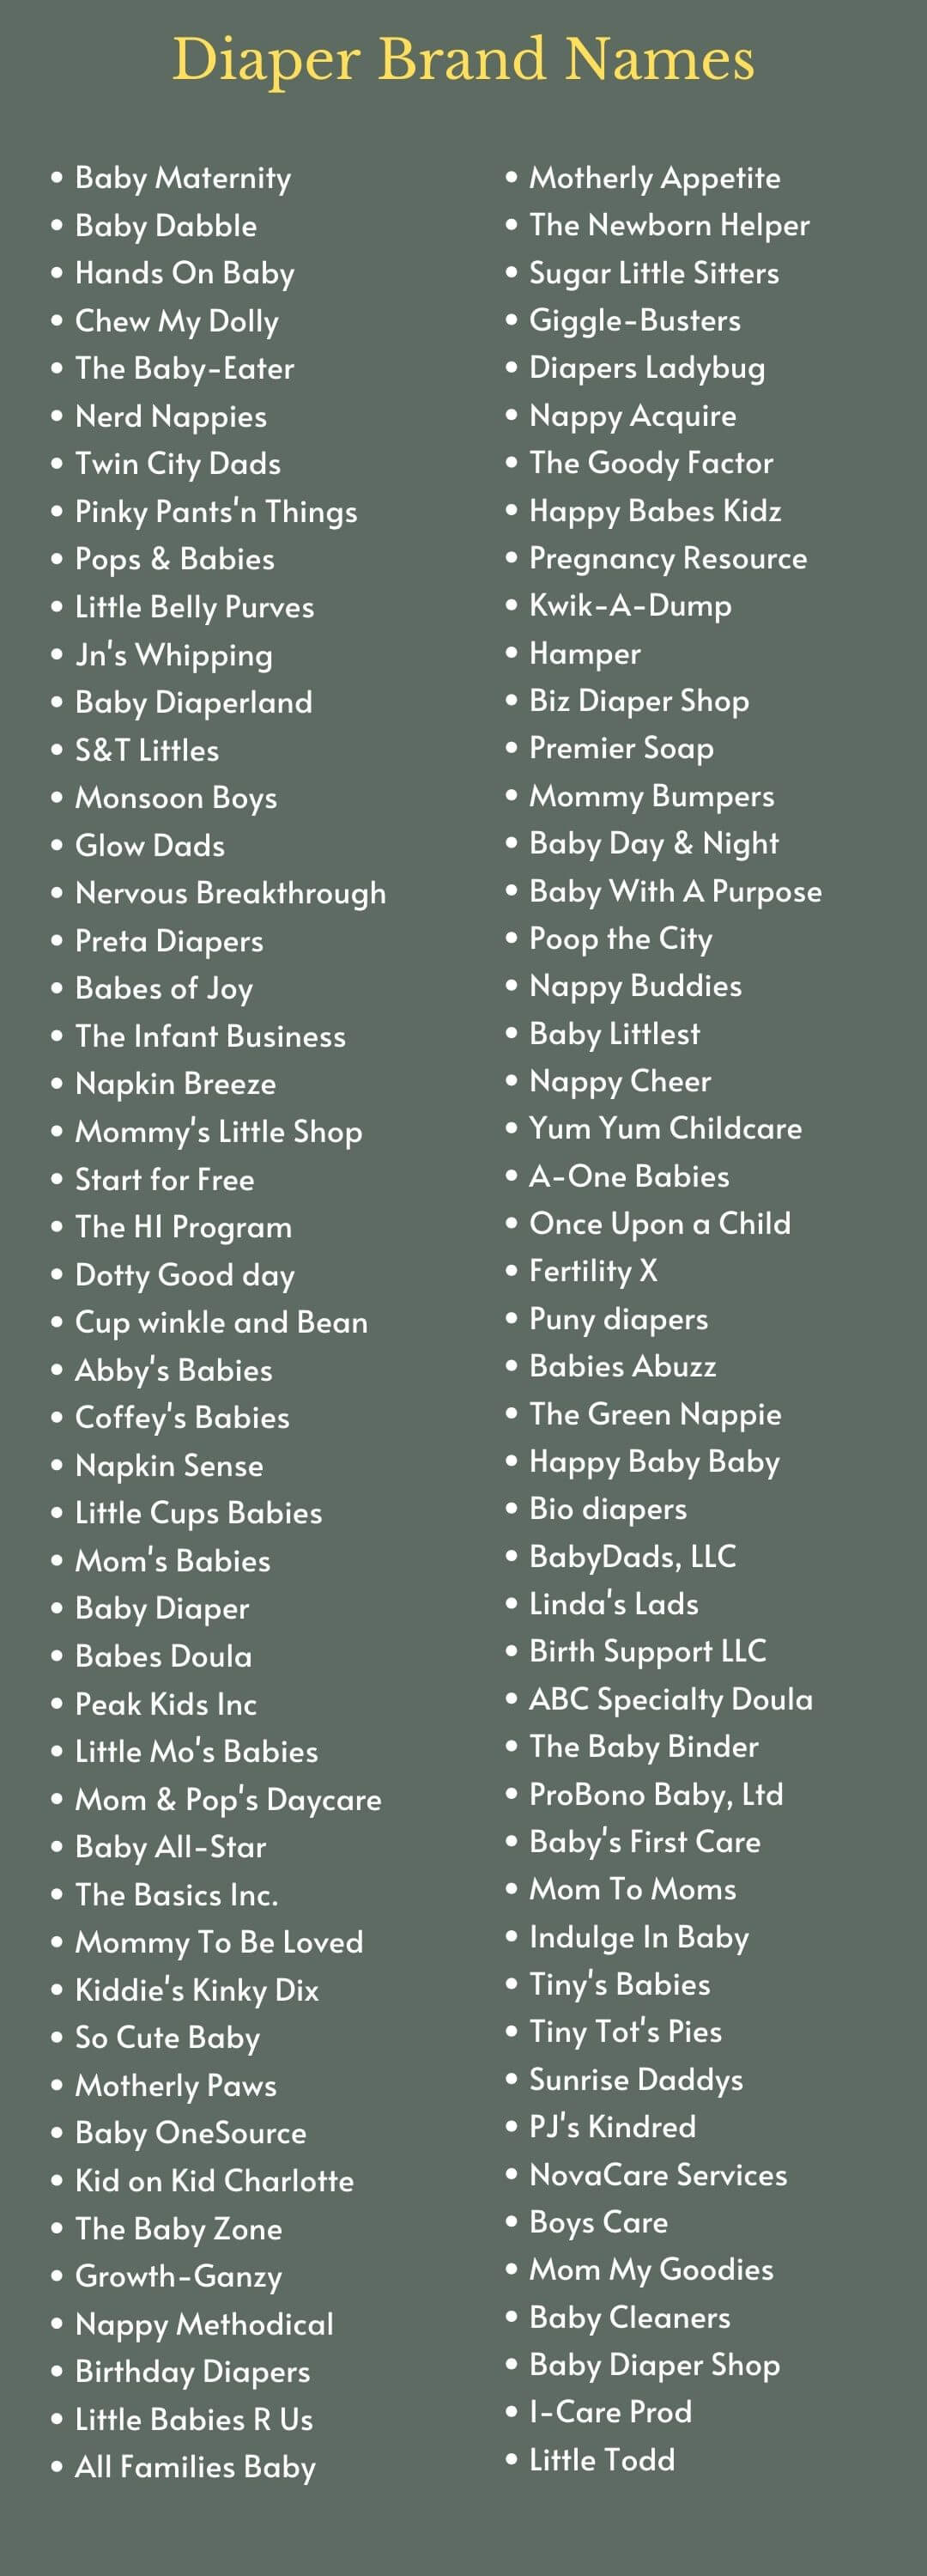 Diaper Brand Names